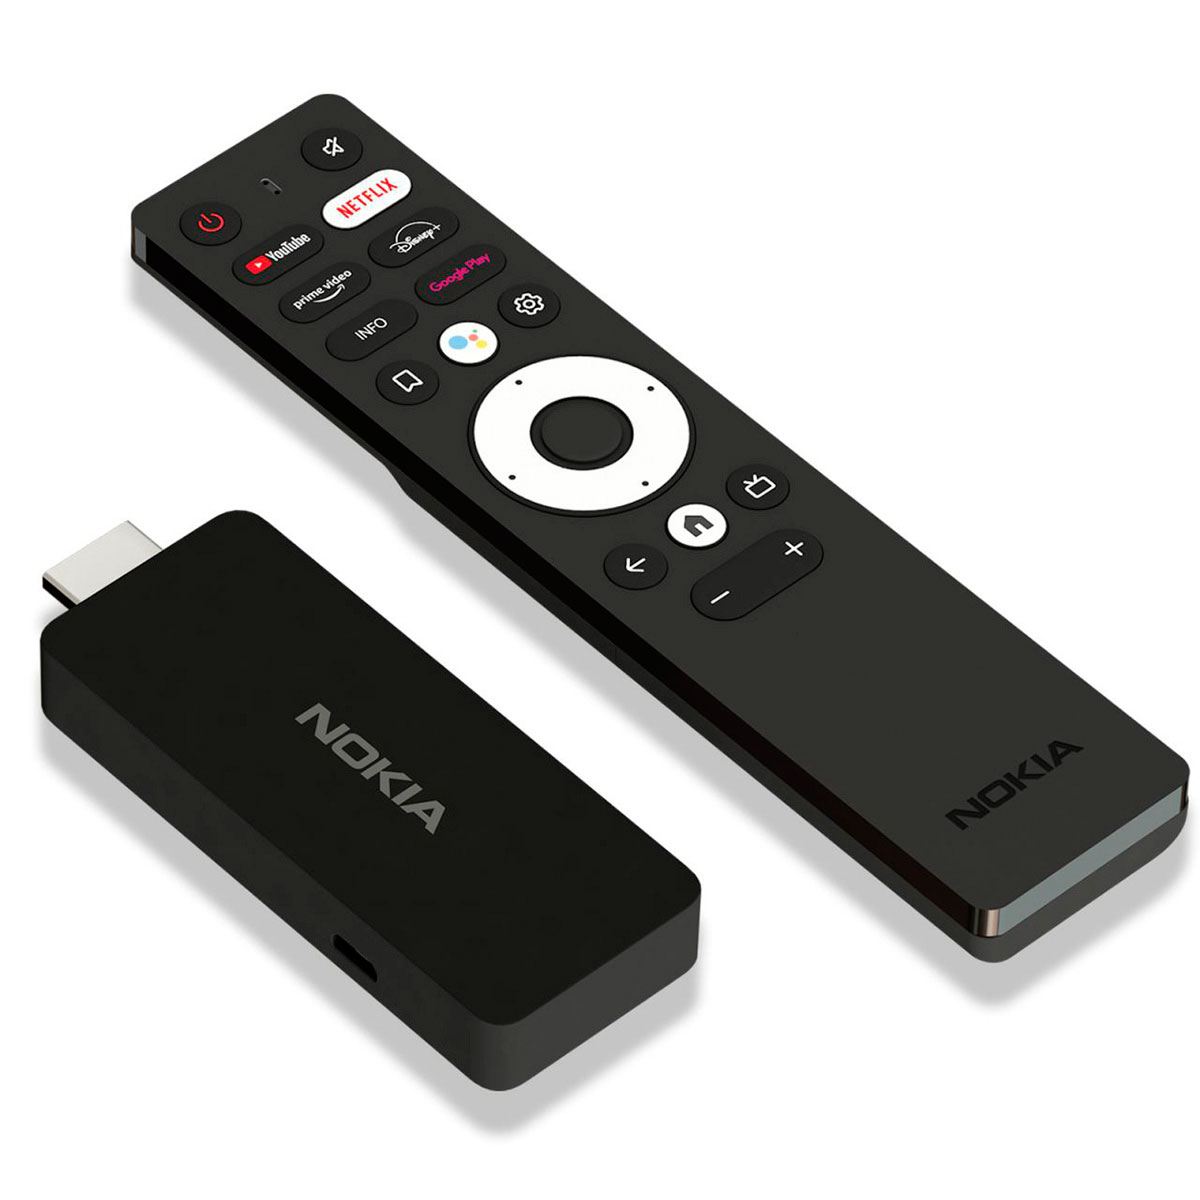 Elendig væske knap Nokia Streaming Stick 800 m/Chromecast + Fjernbetjening - Full HD (Android)